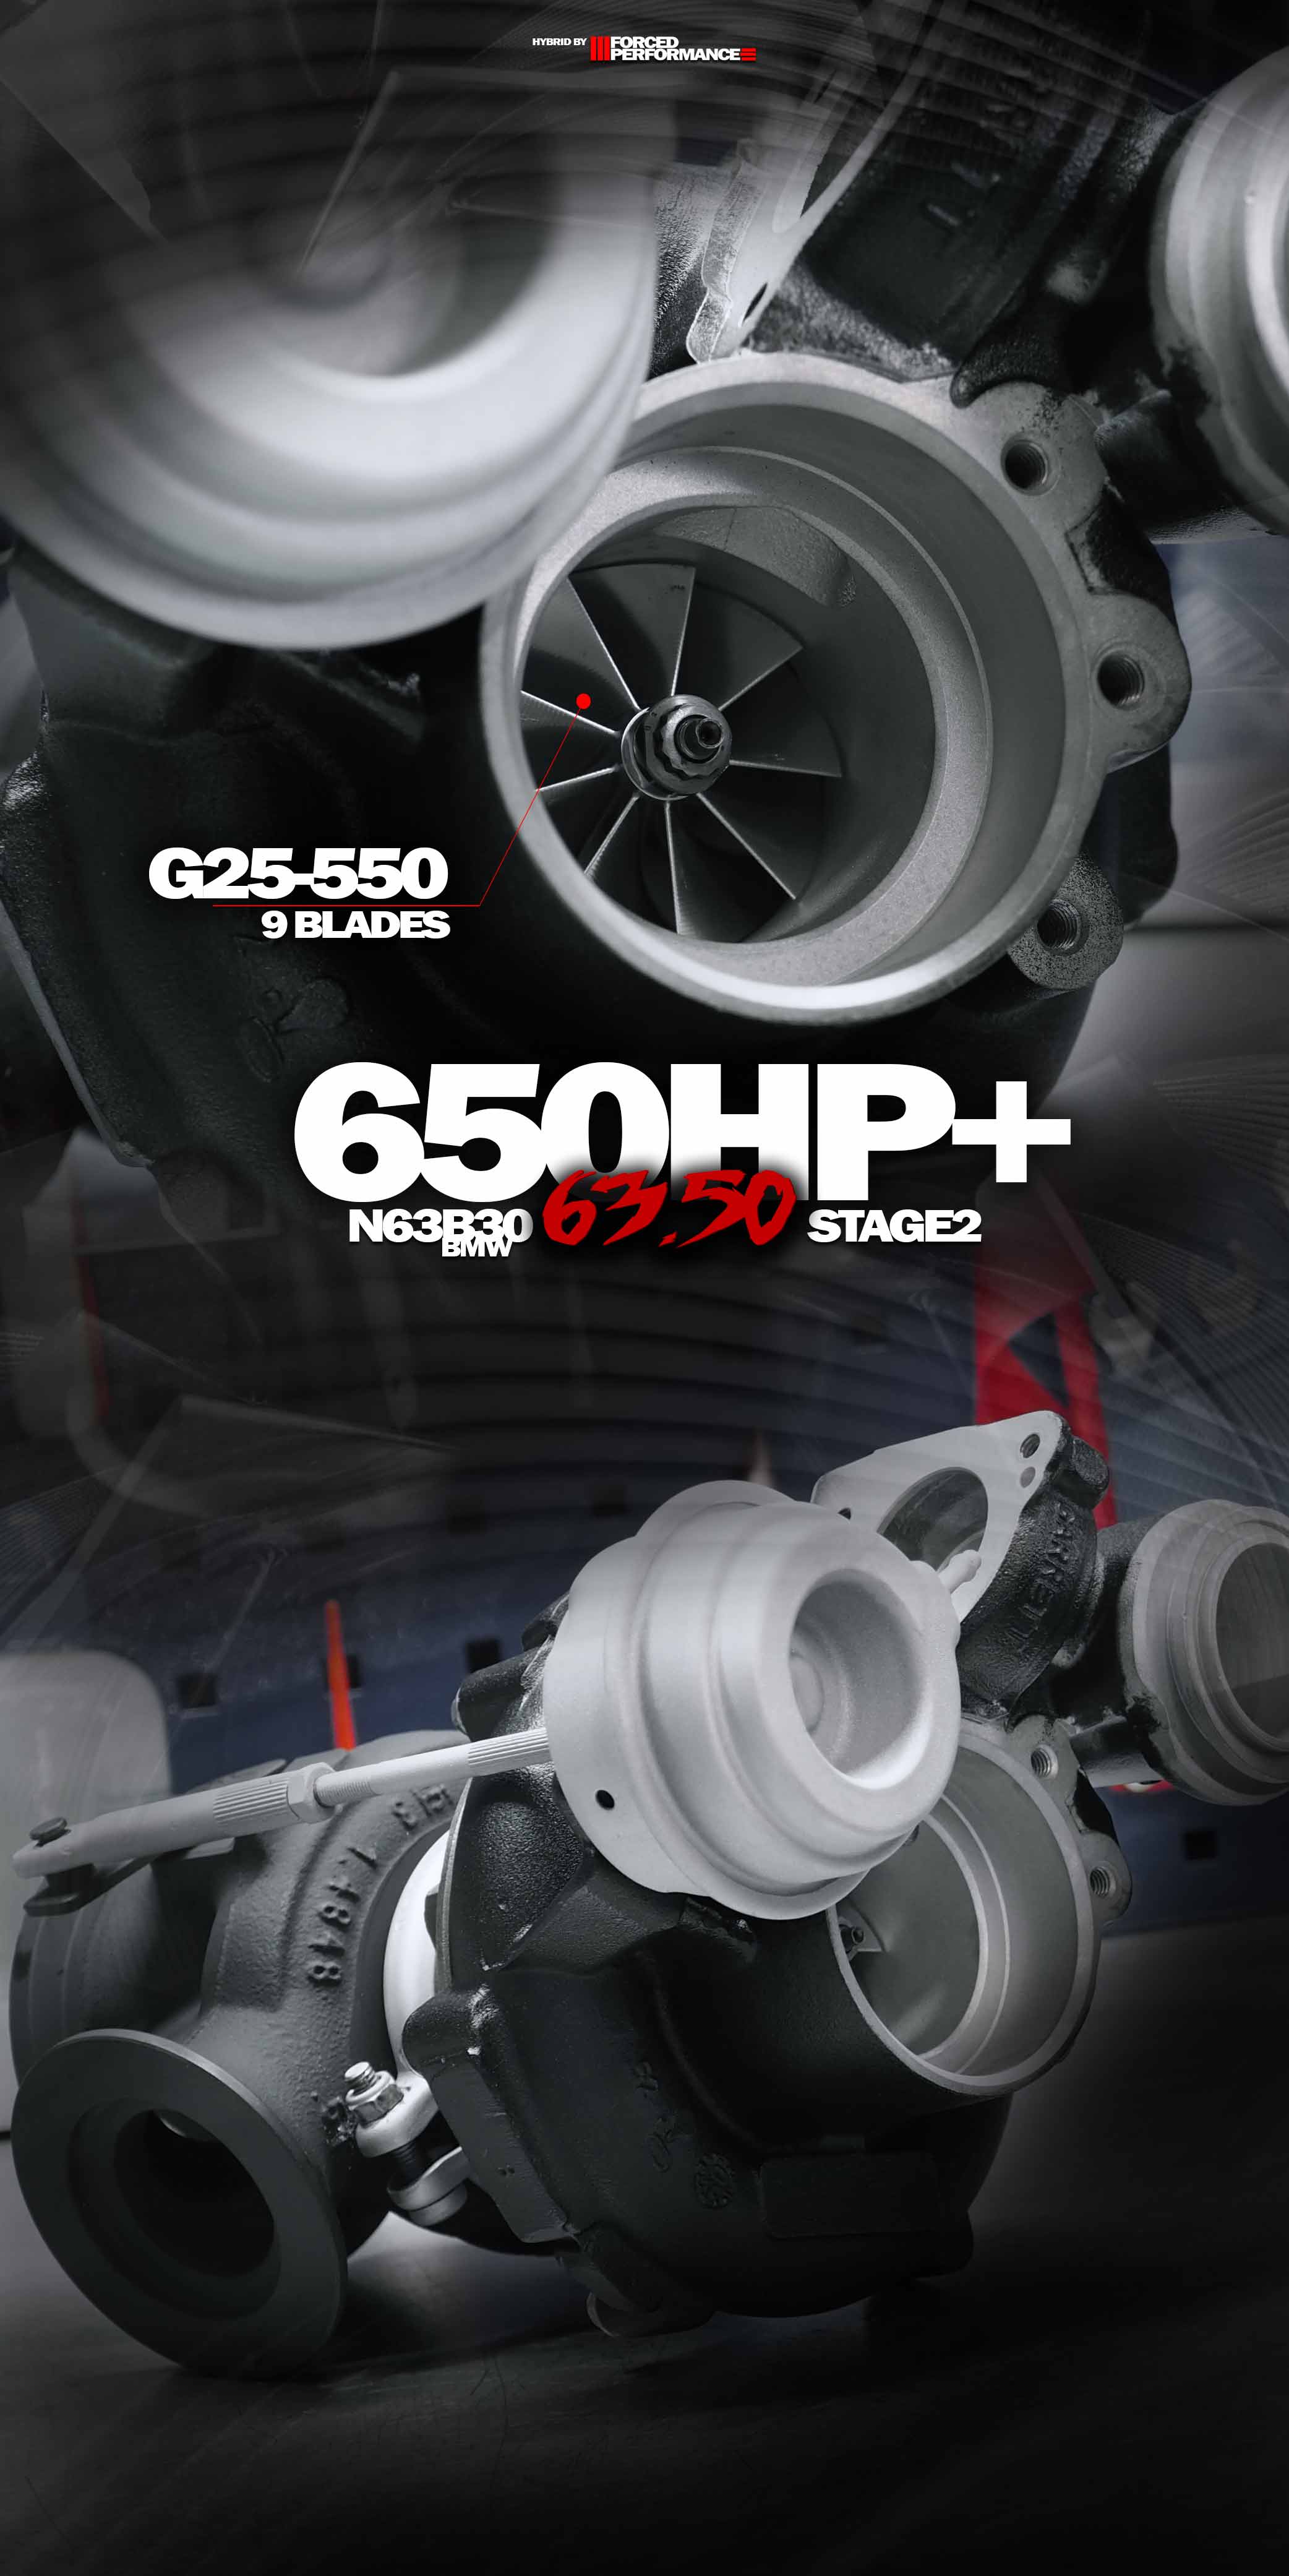 Гибридная турбин для BMW N63 с потенциалом в 650 hpr